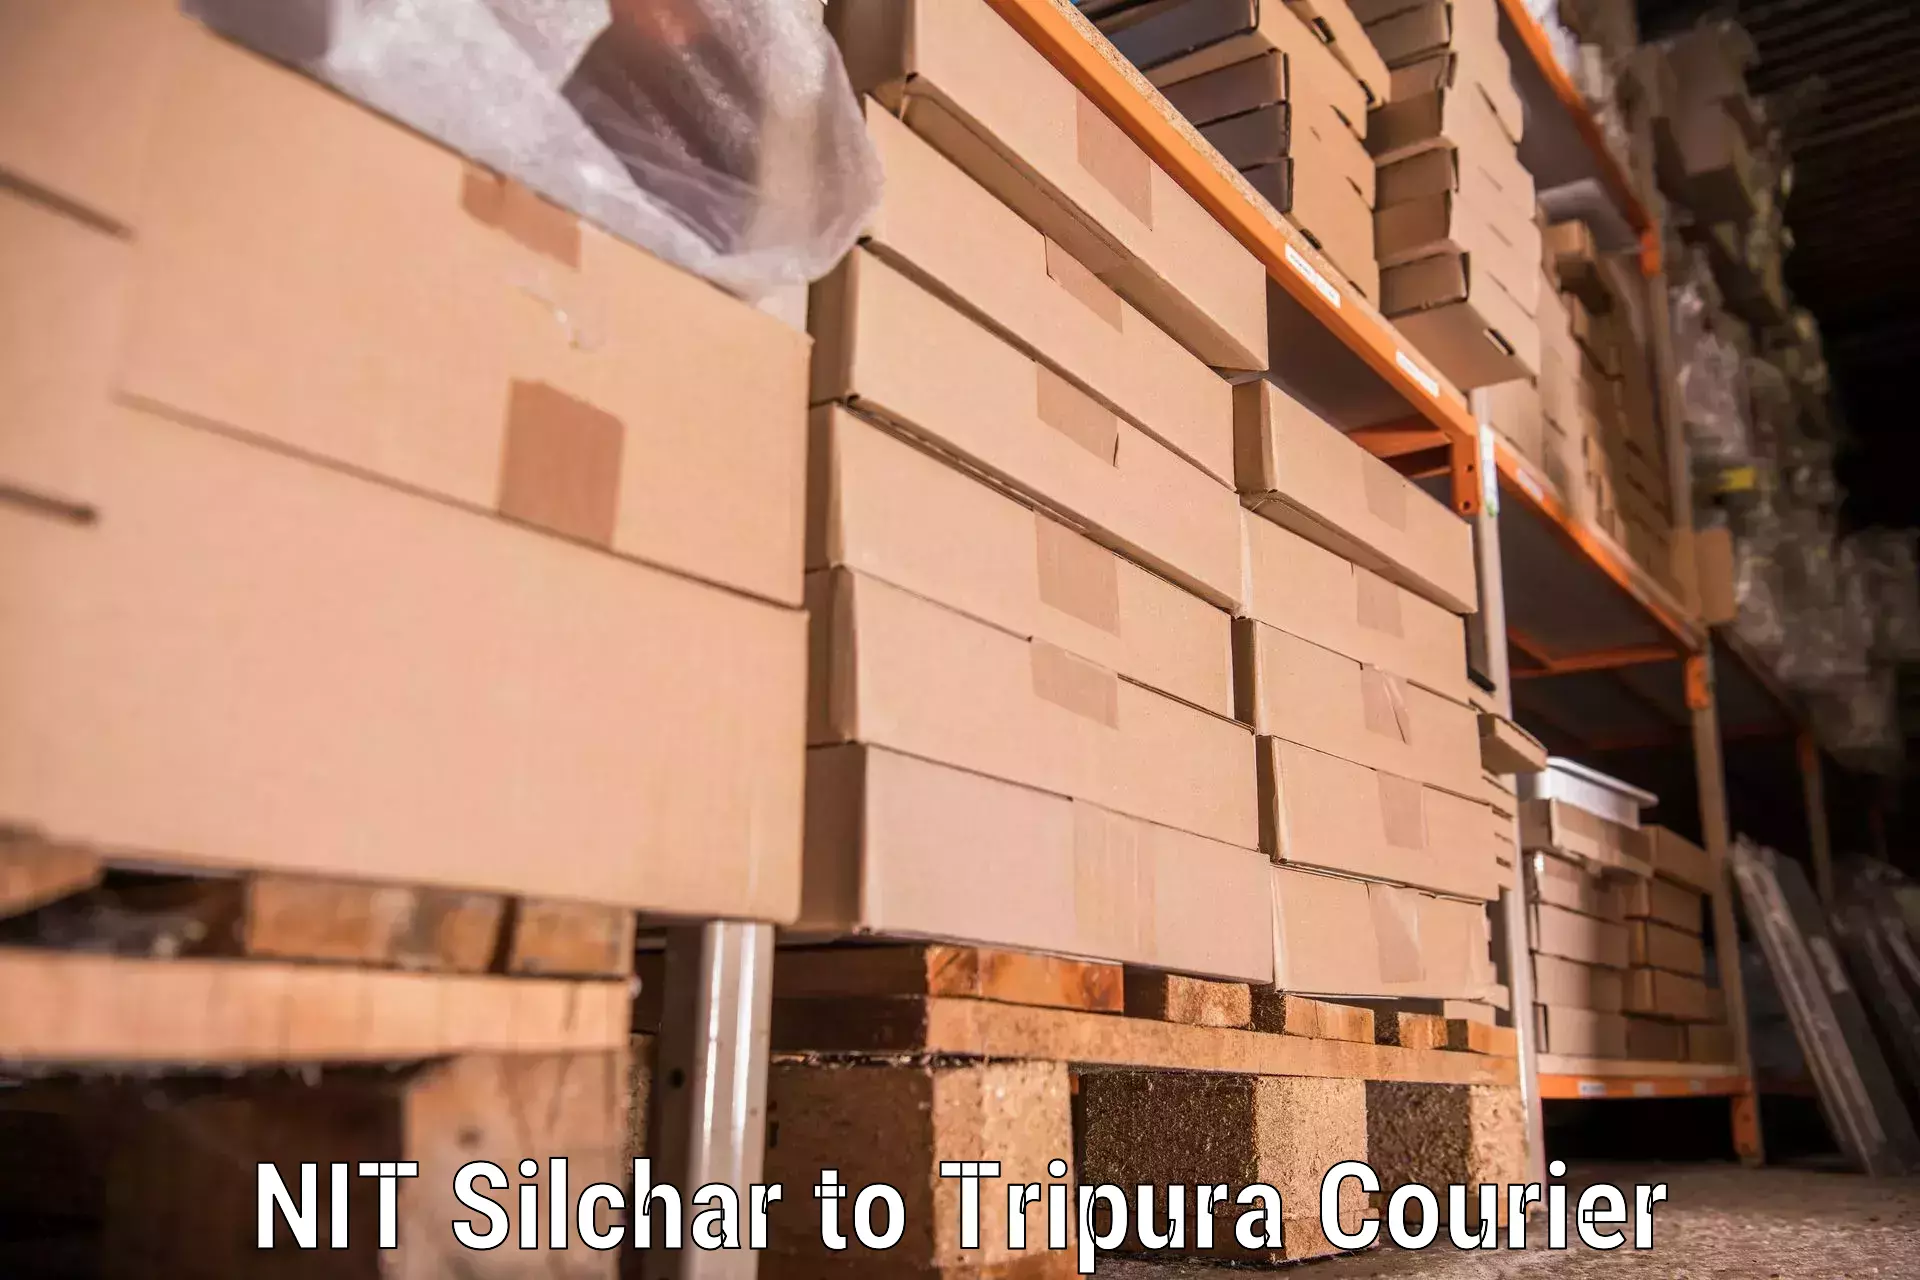 Professional goods transport NIT Silchar to Agartala